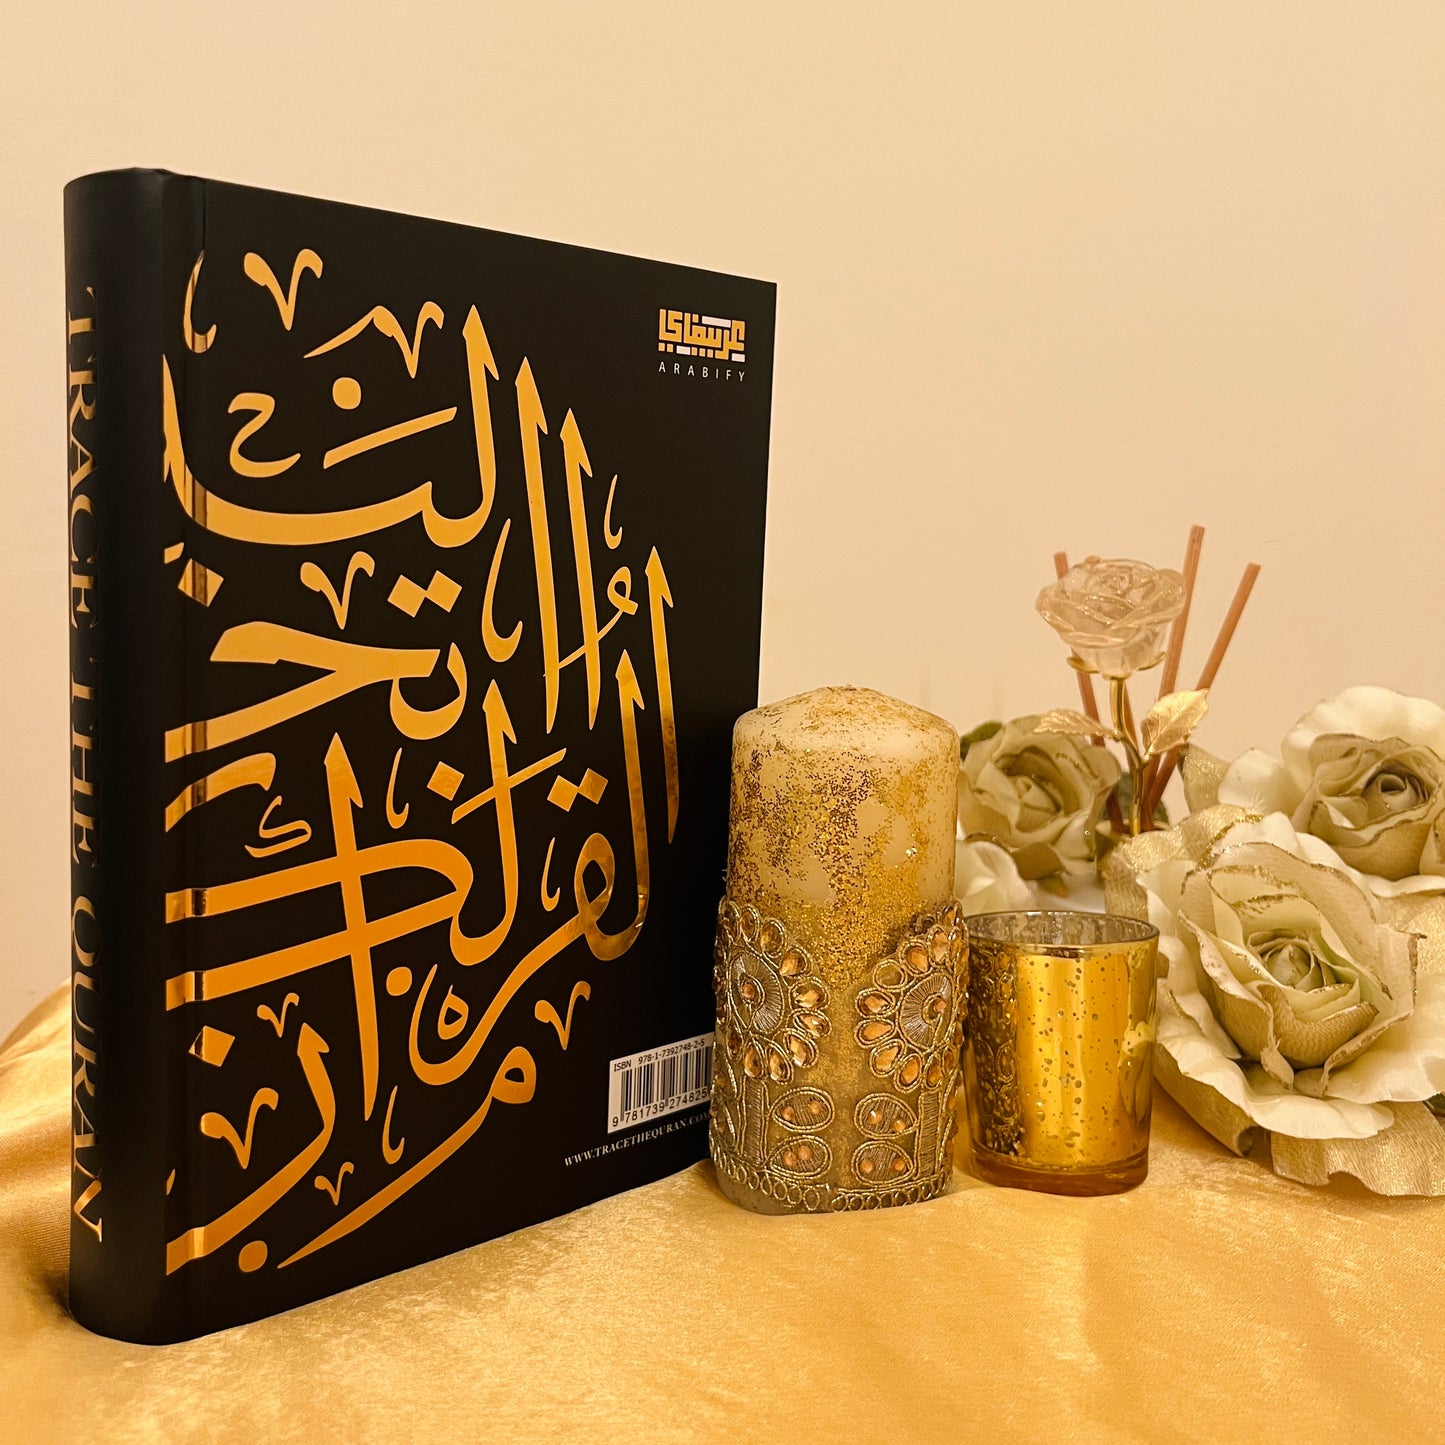 Trace The Quran - Black Edition